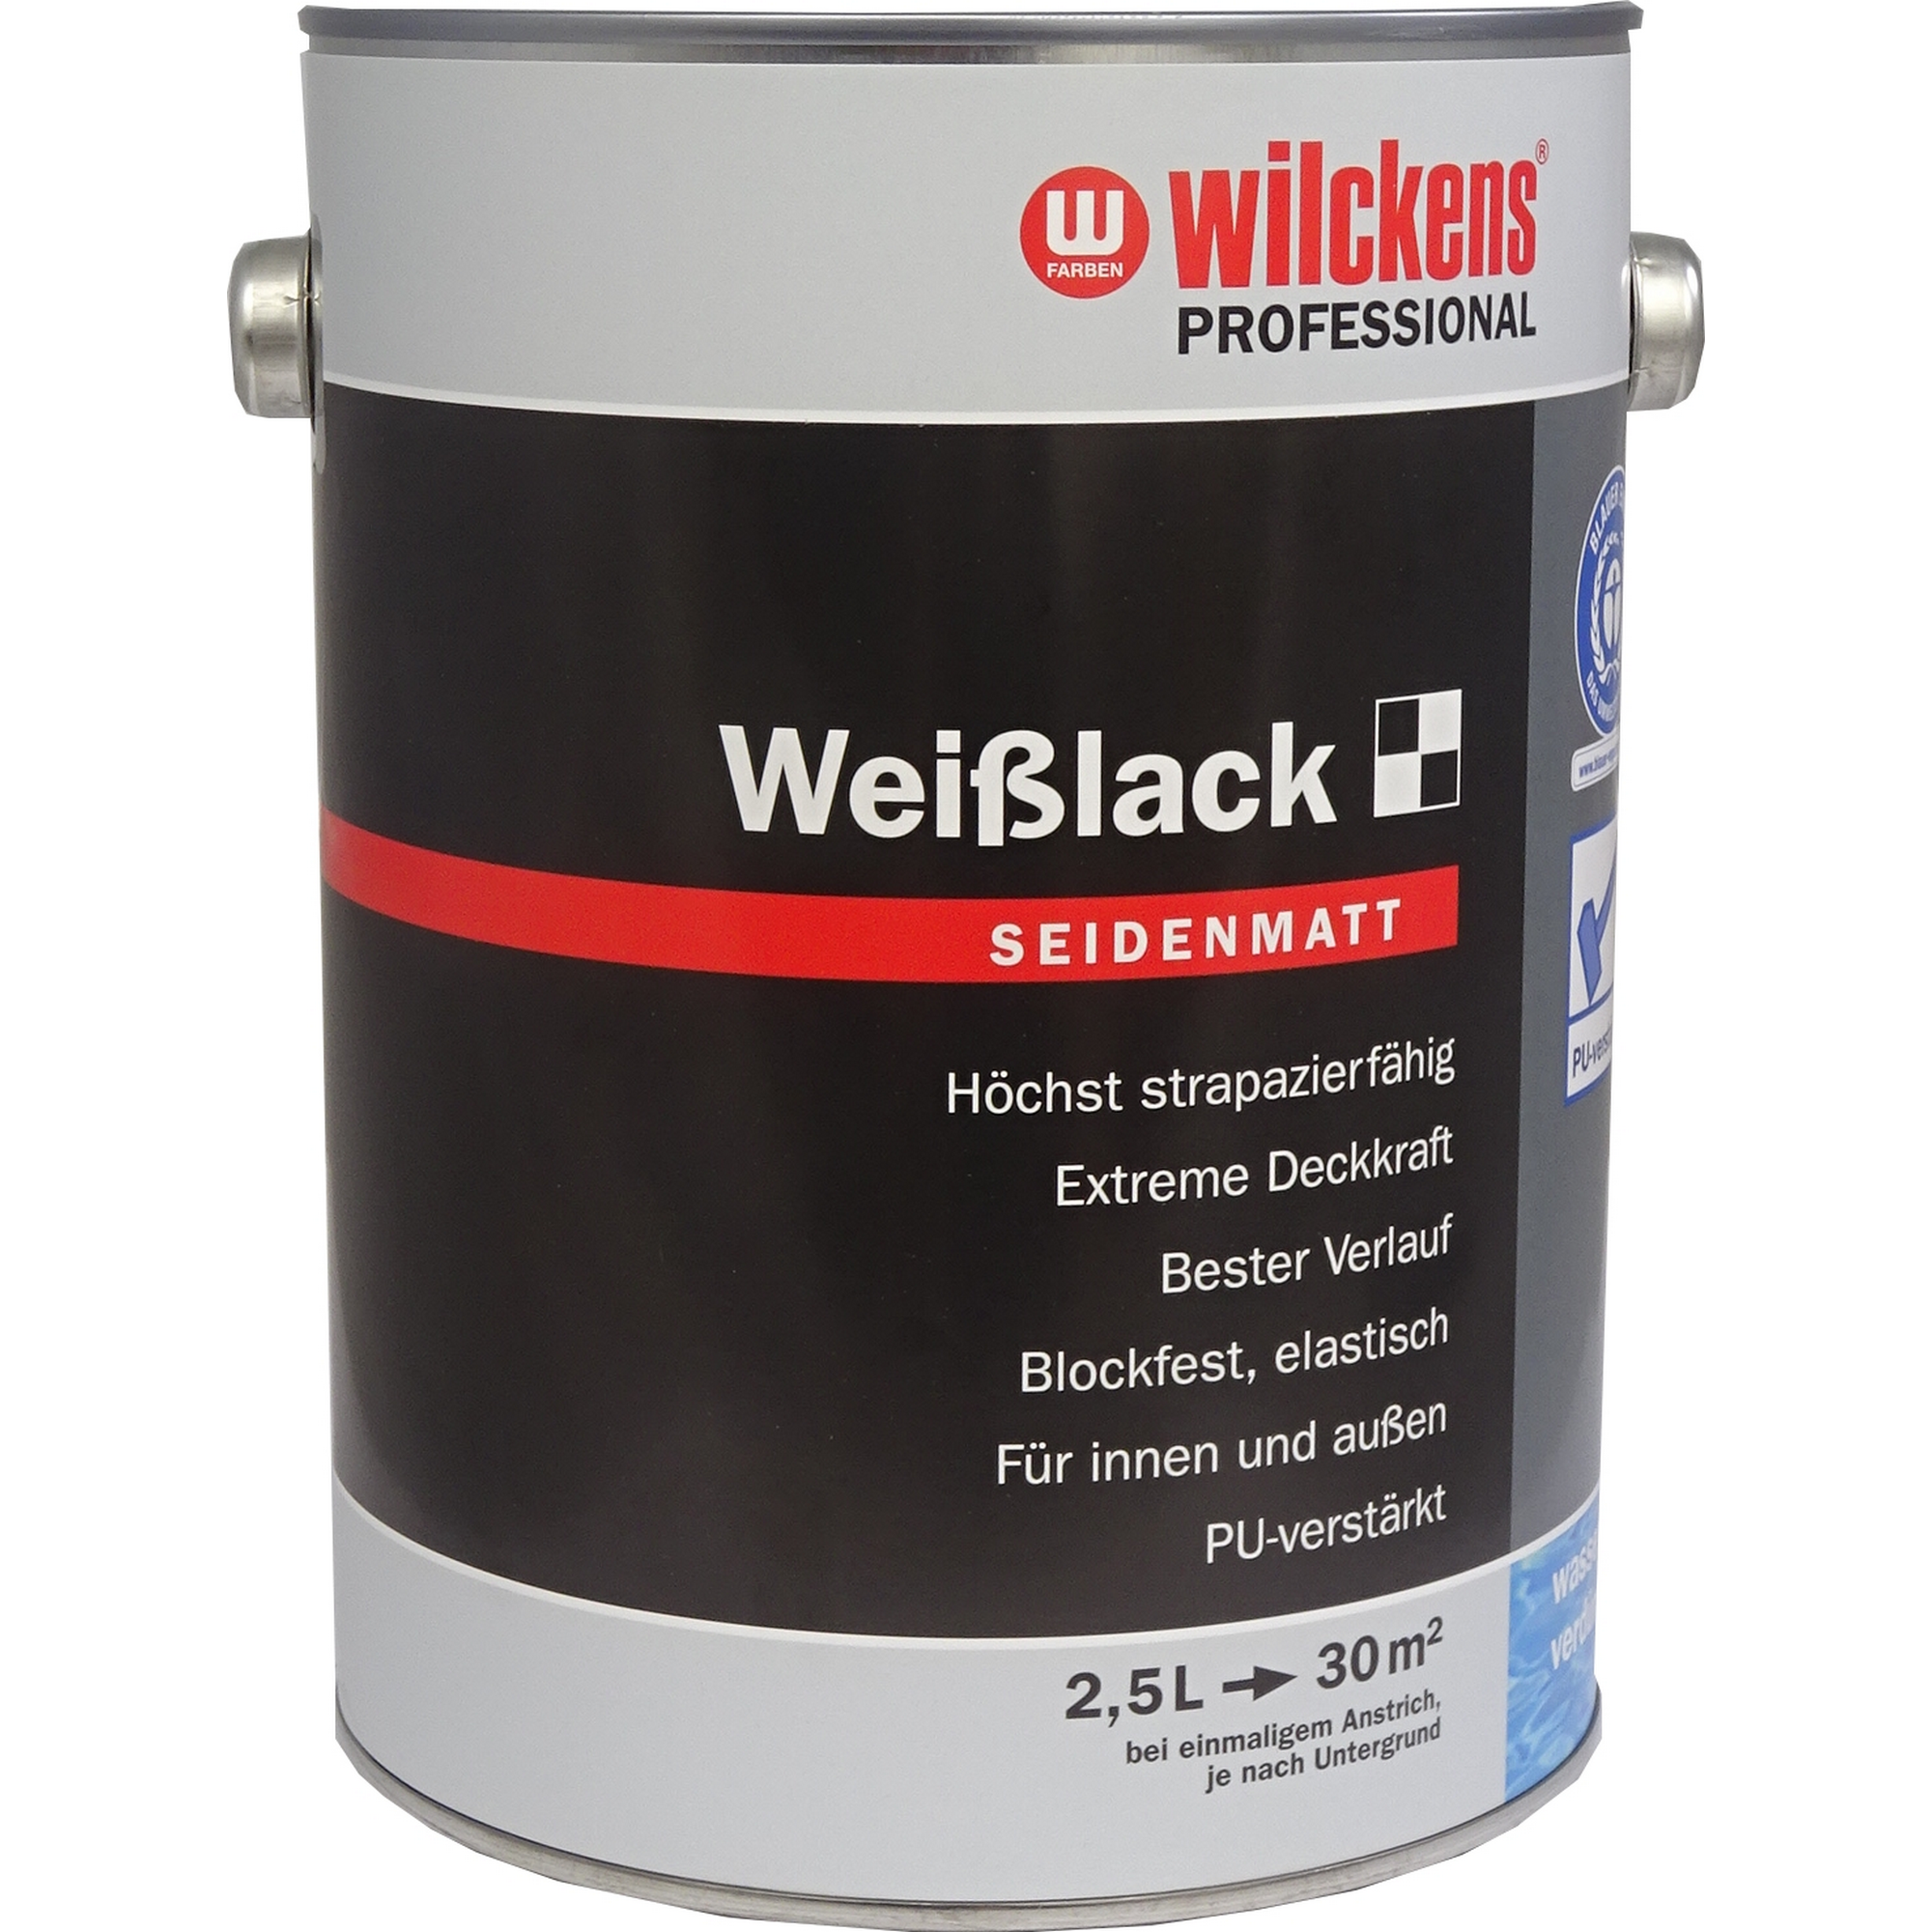 Weißlack 'Professional' weiß seidenmatt 2,5 l + product picture